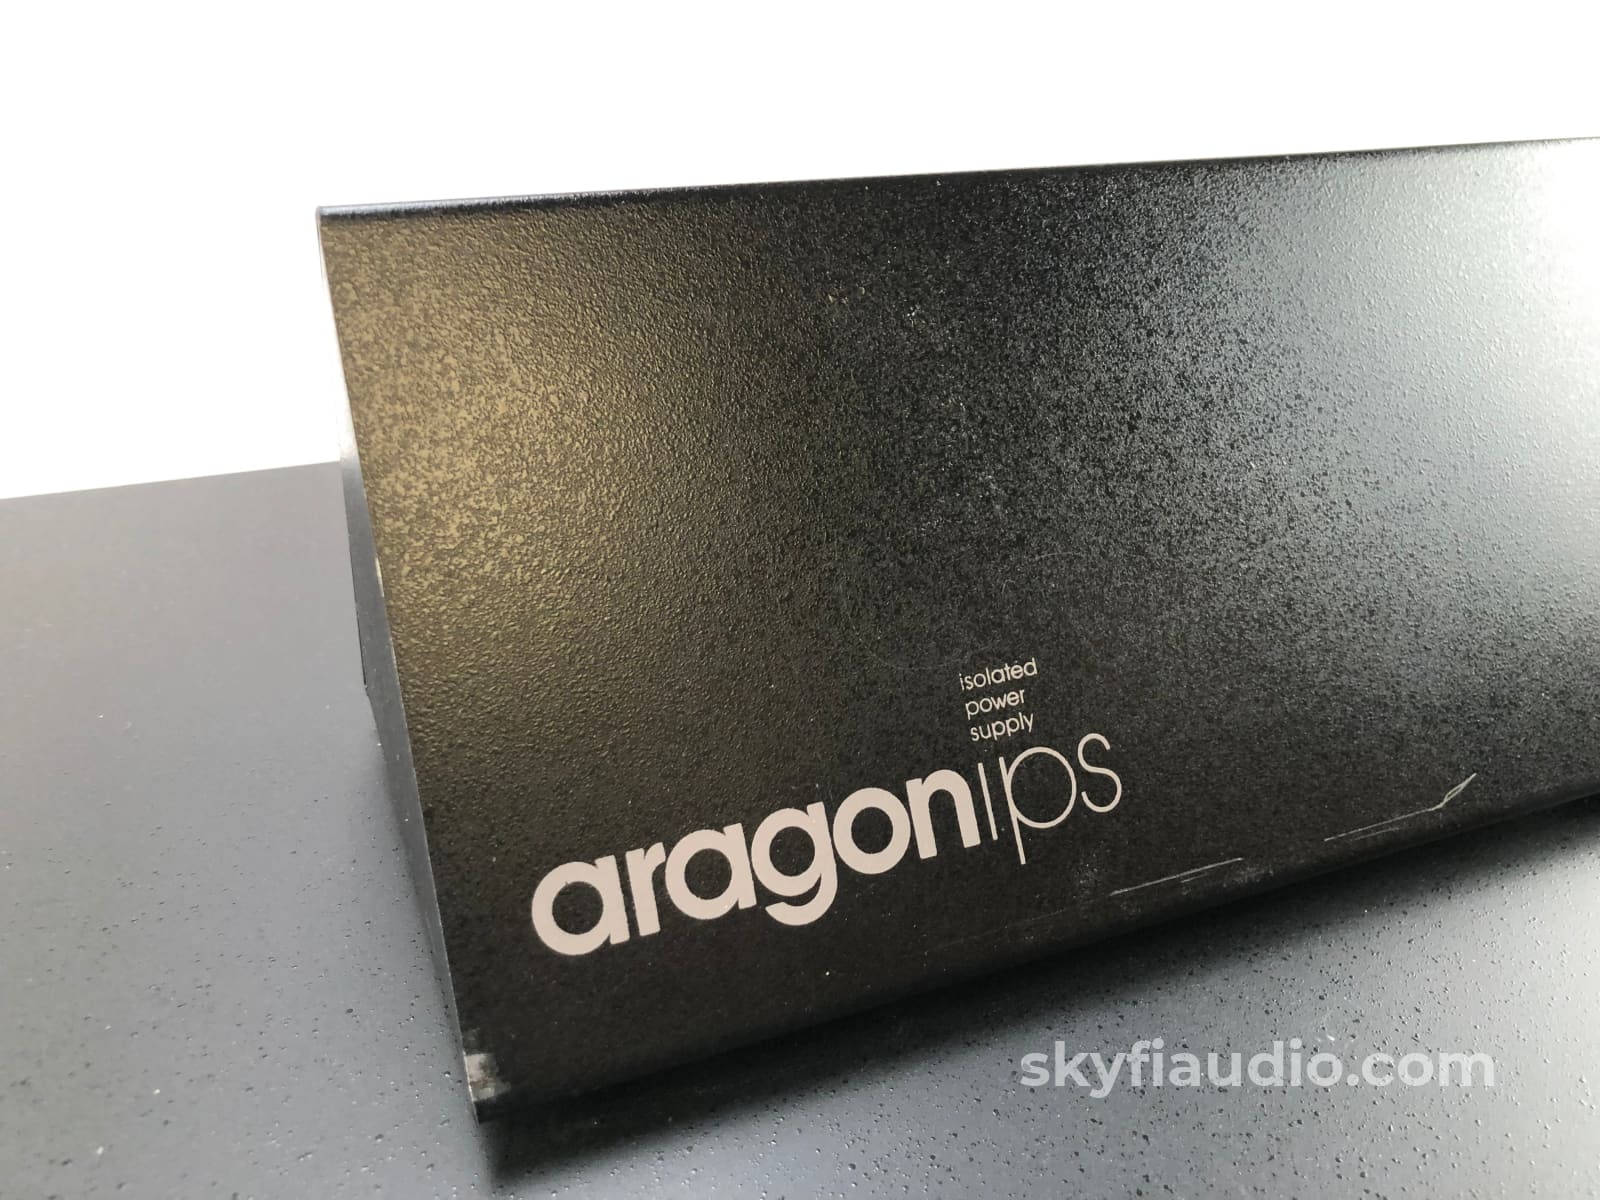 Aragon D2A Dac With External Power Supply (Aragon Ips) Cd + Digital